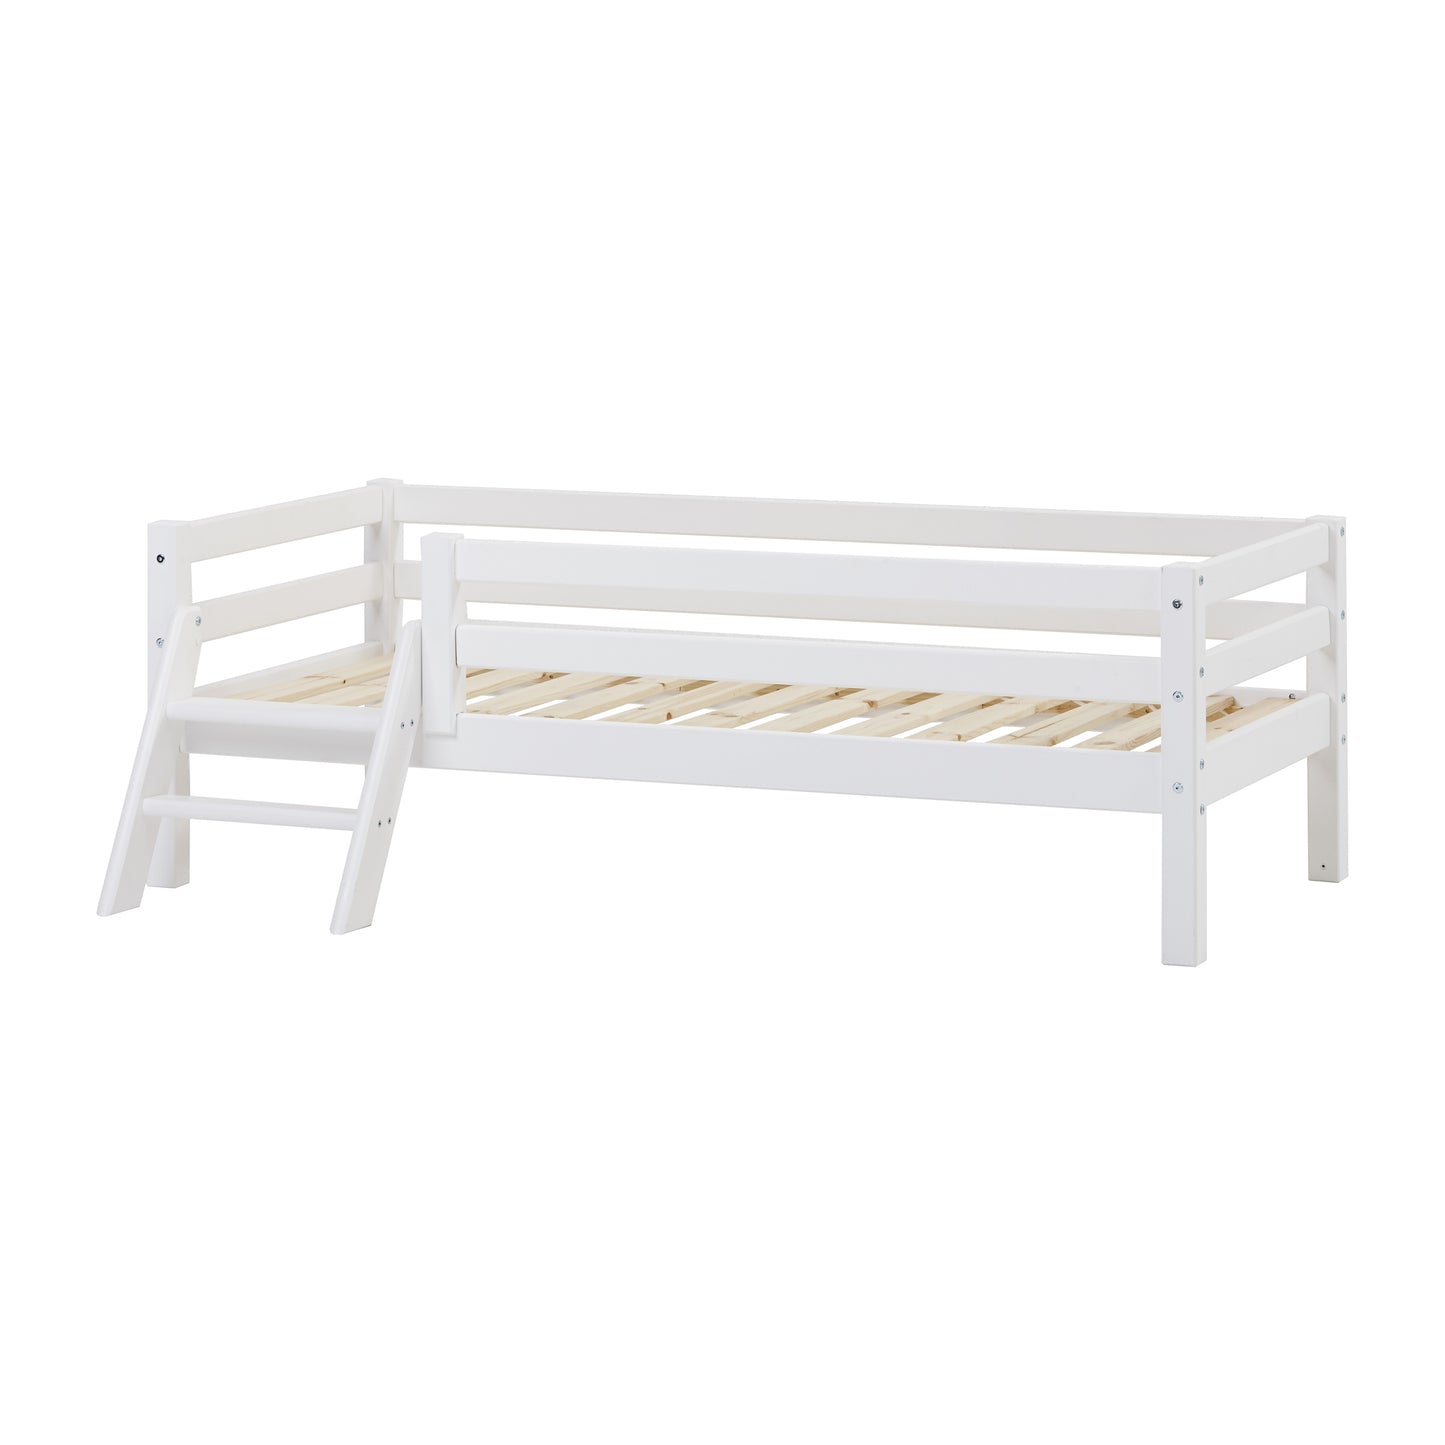 Hoppekids Eco Dream Junior Bed - 70 x 160 cm - White